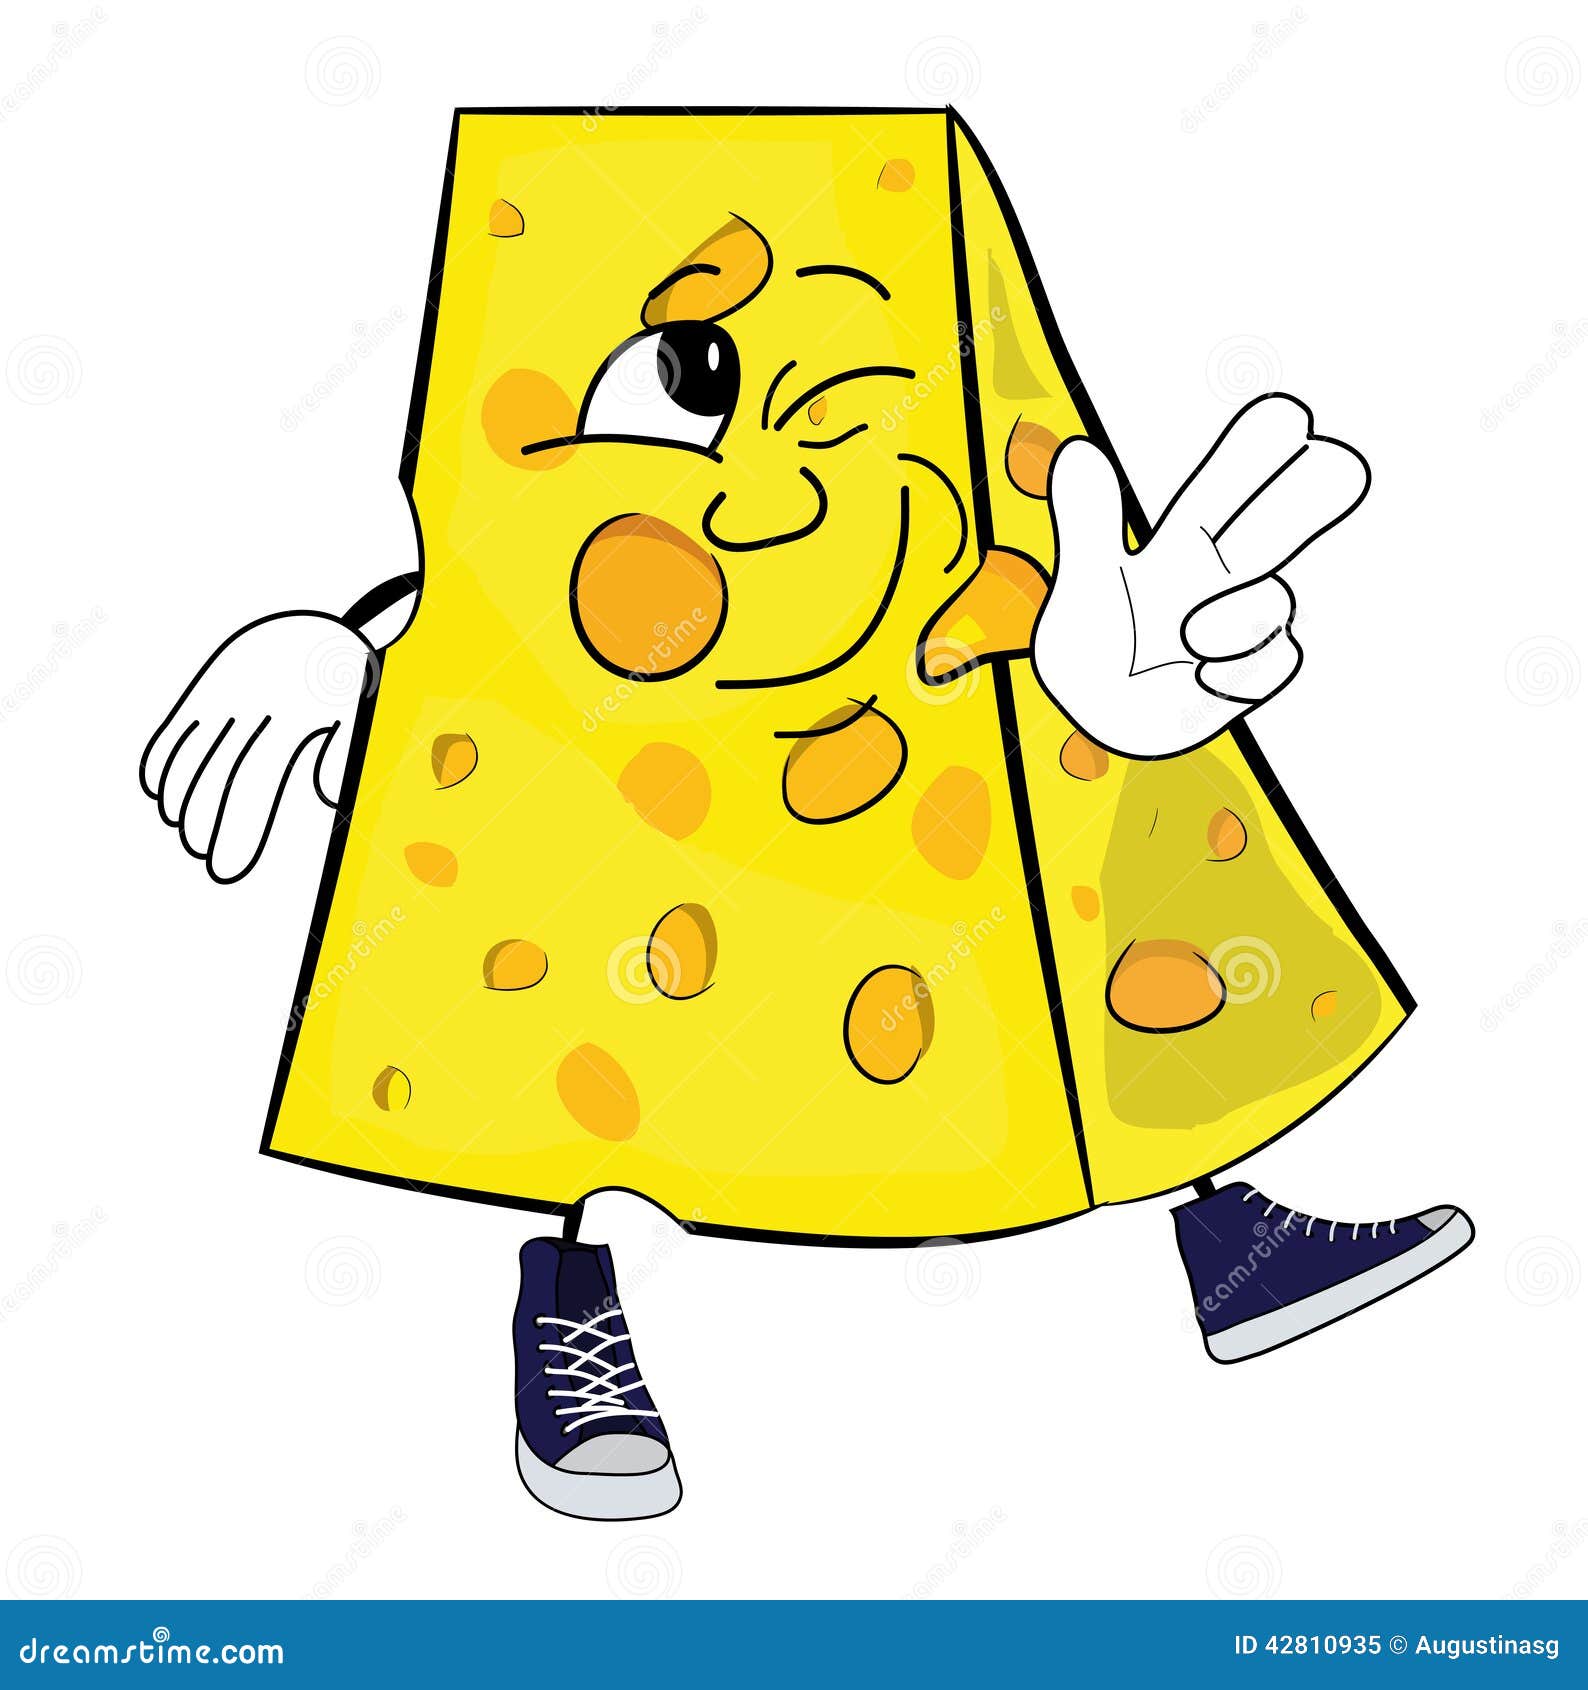 Cheese cartoon character stock illustration. Illustration of person -  42810935